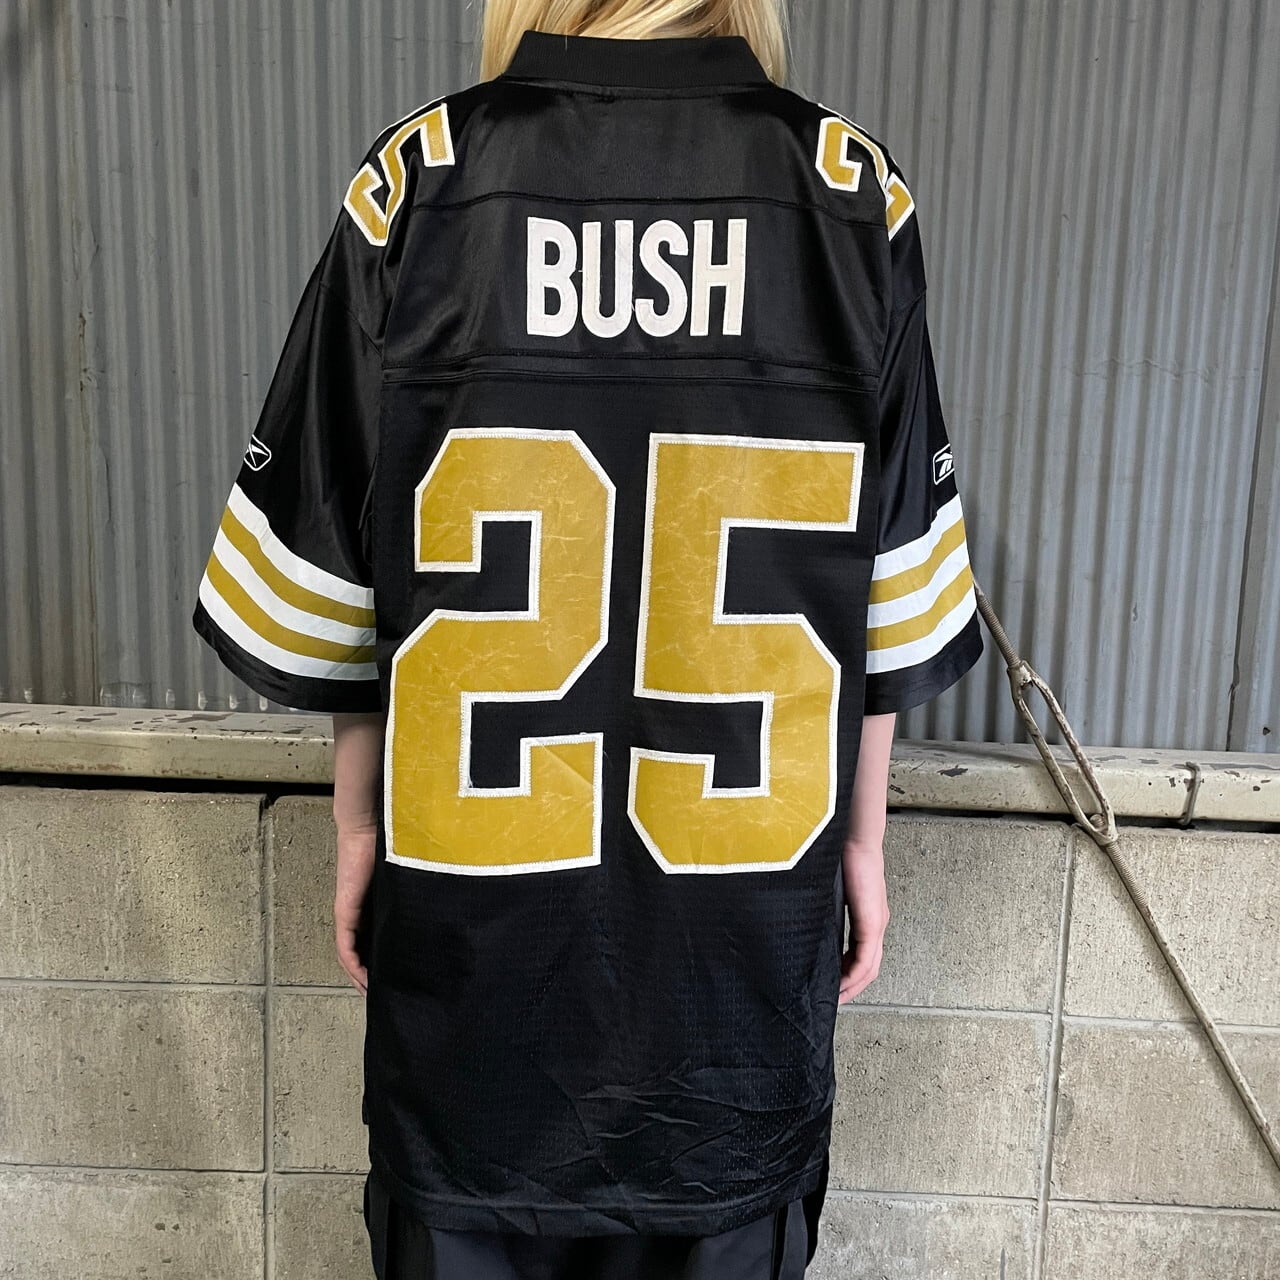 Reebok リーボック NFL BUSH 25 ゲームシャツ メンズM 古着 レプリカ 